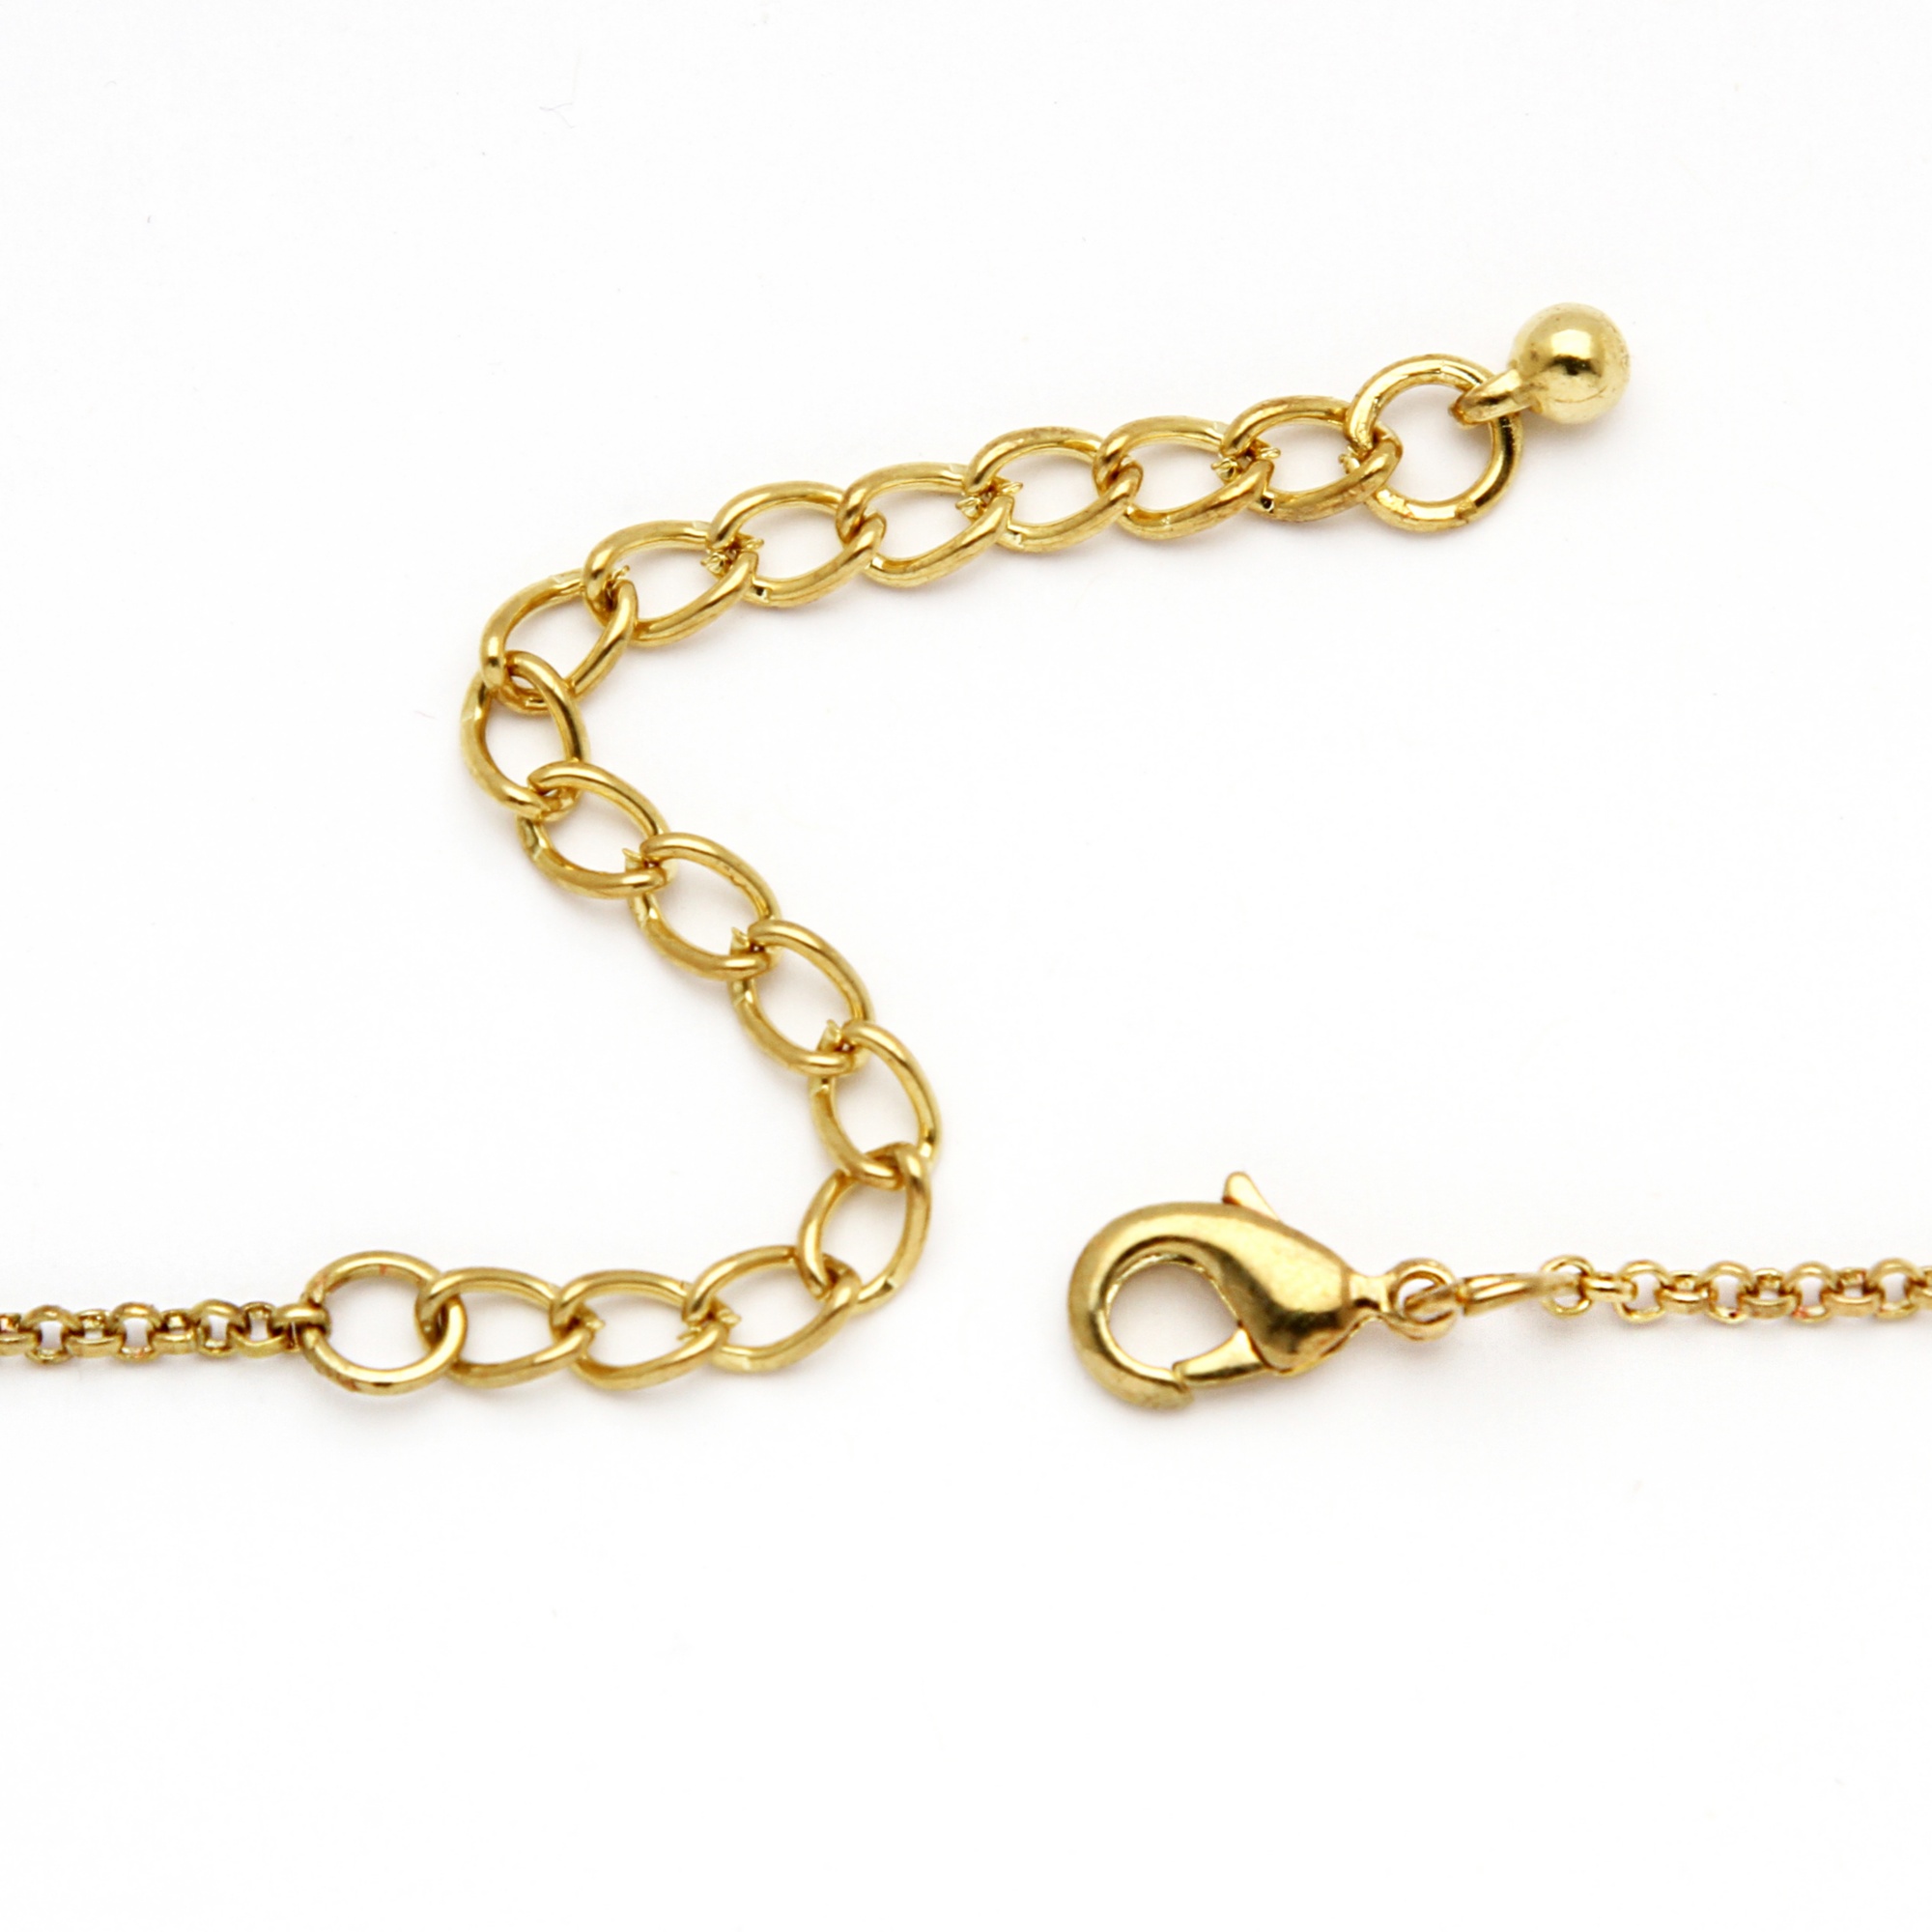 Round Multi-Color Crystal Yellow Gold Tone "Confetti" Globe Drop Pendant and Necklace Chain 22"